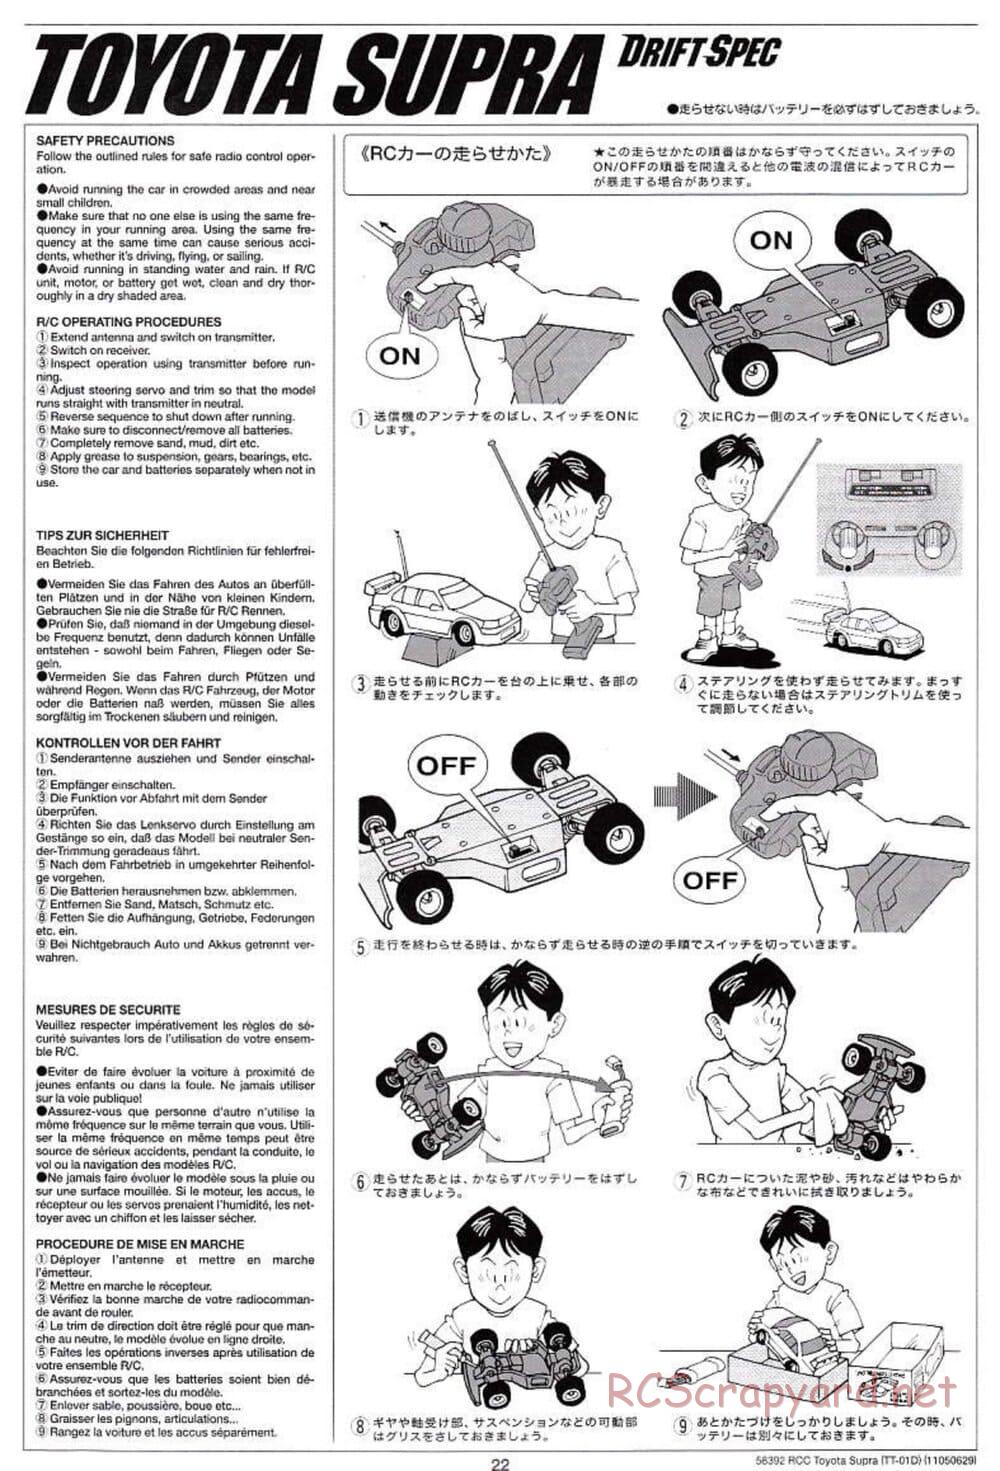 Tamiya - Toyota Supra - Drift Spec - TT-01D Chassis - Manual - Page 22